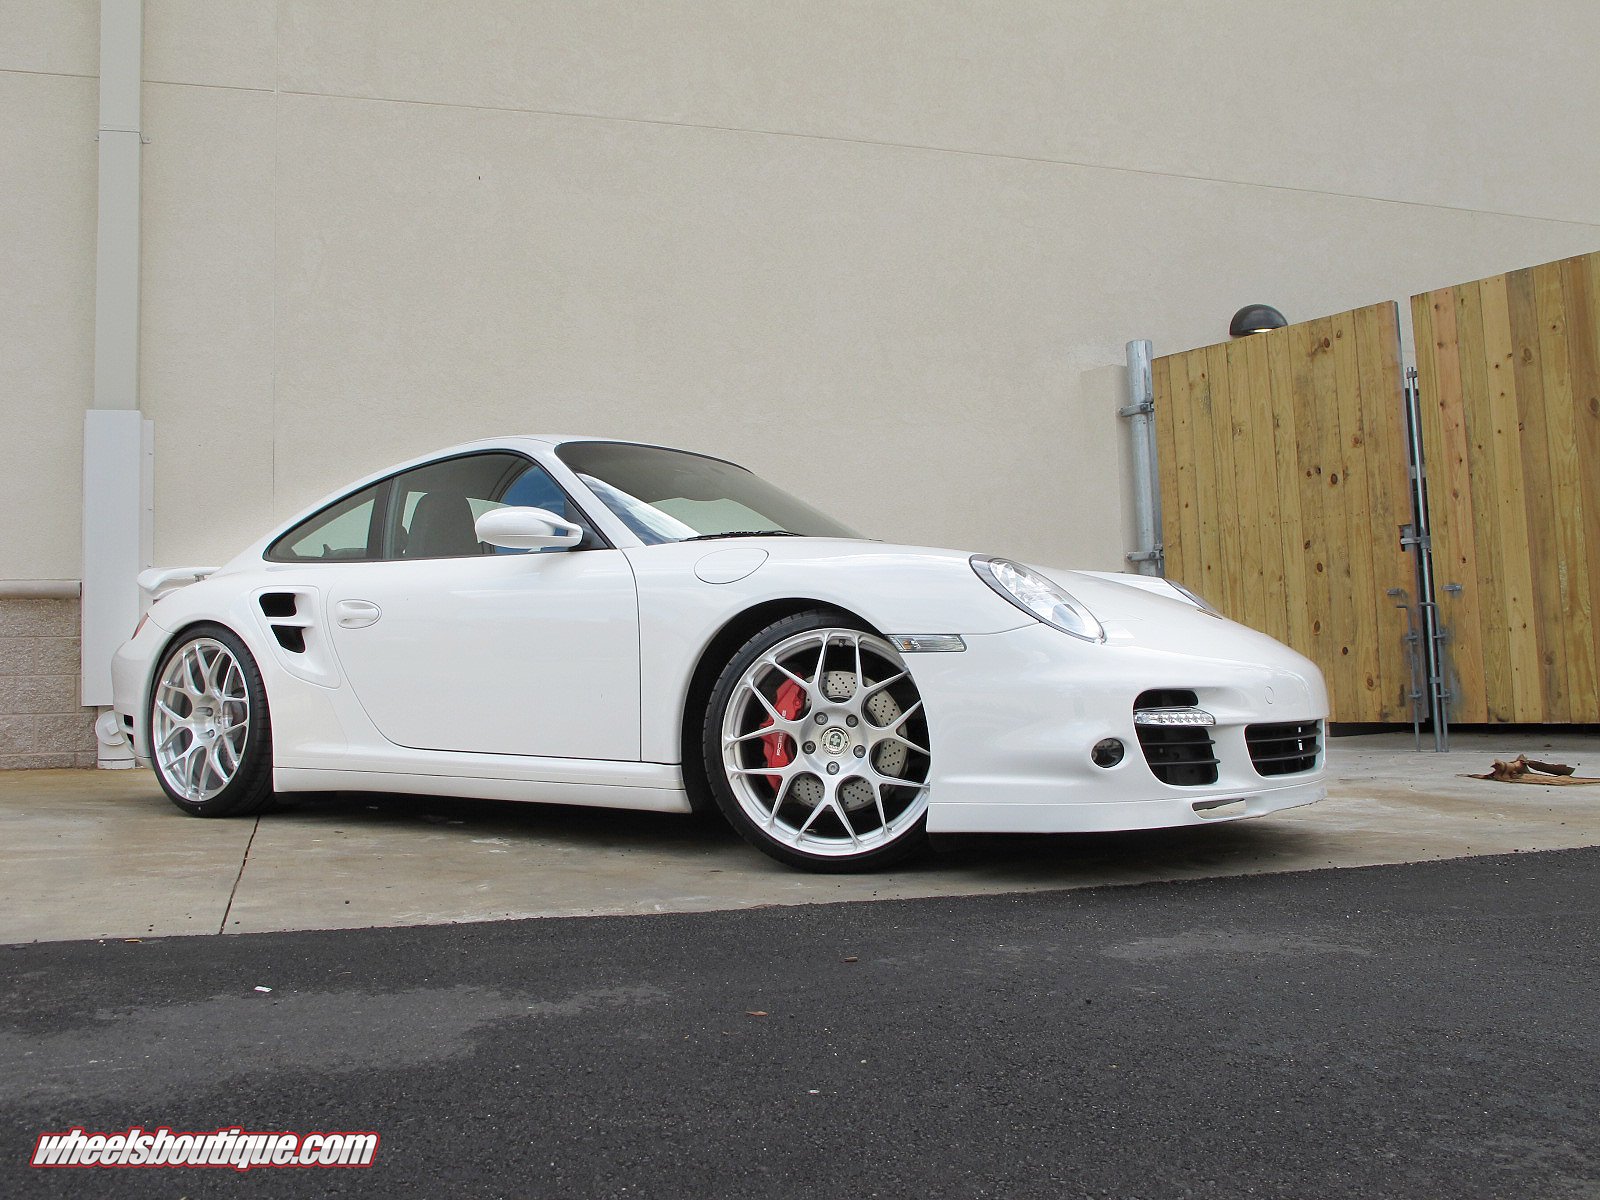 911, 997, Porsche, Turbo, Hre, Whells, Supercar, Tuning Wallpaper